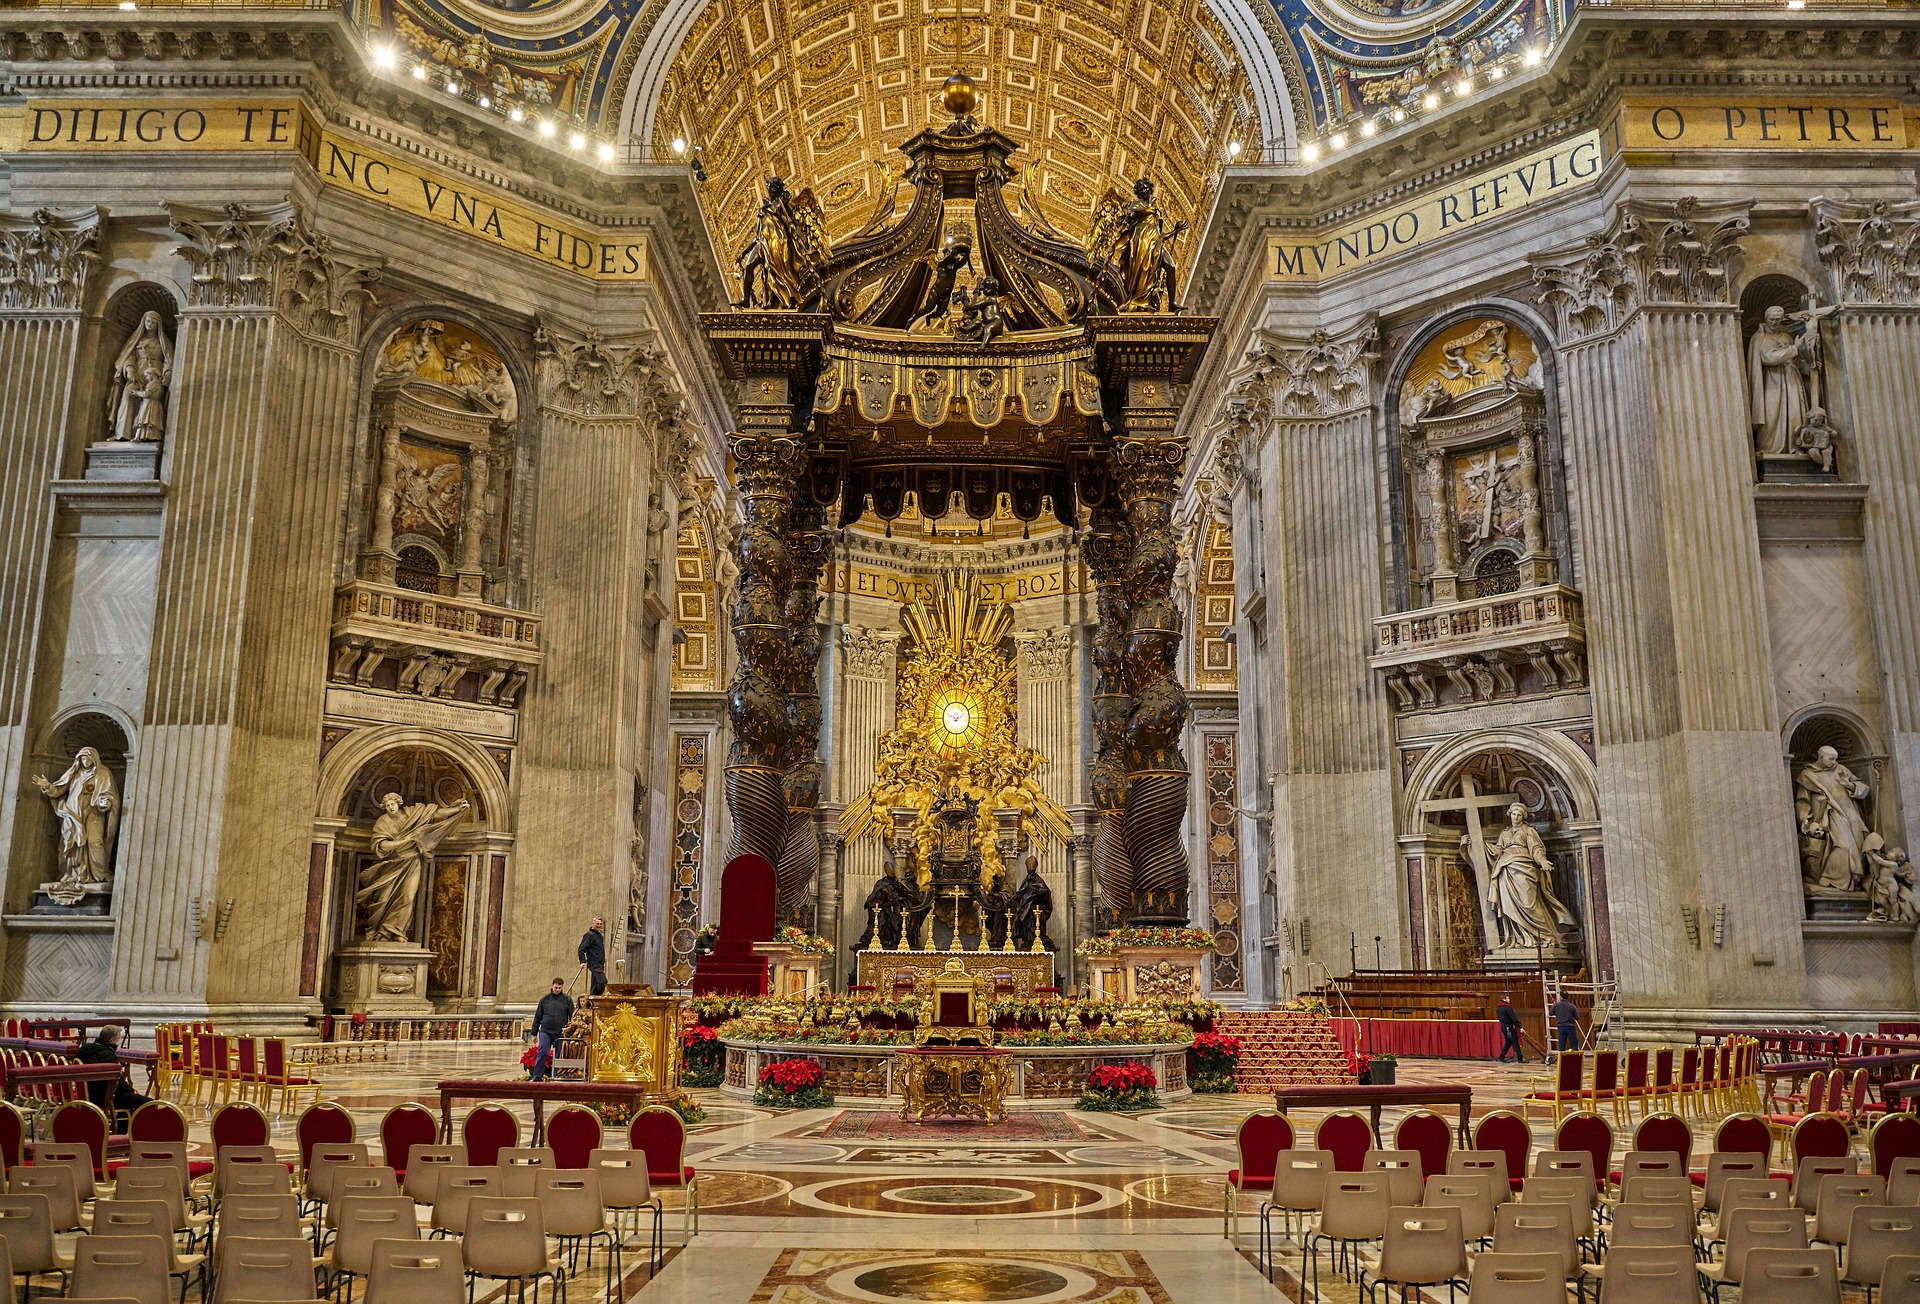 Baldachin of St. Peter's Basilica